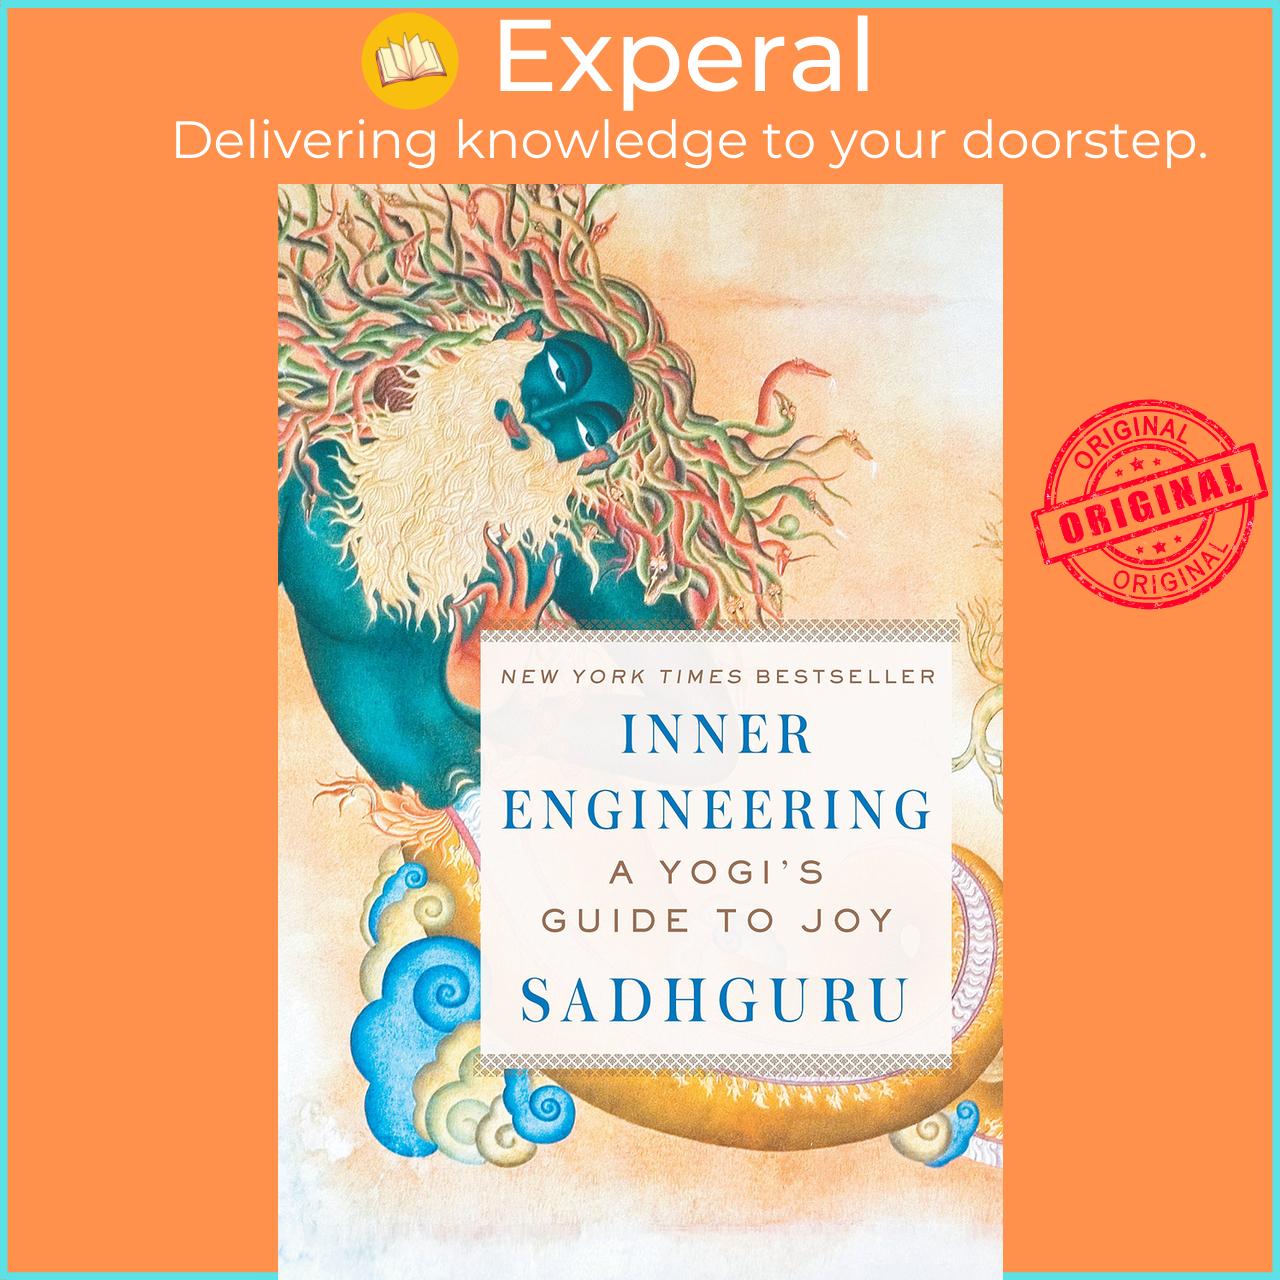 Sách - Inner Engineering : A Yogi's Guide to Joy by Sadhguru (US edition, hardcover)